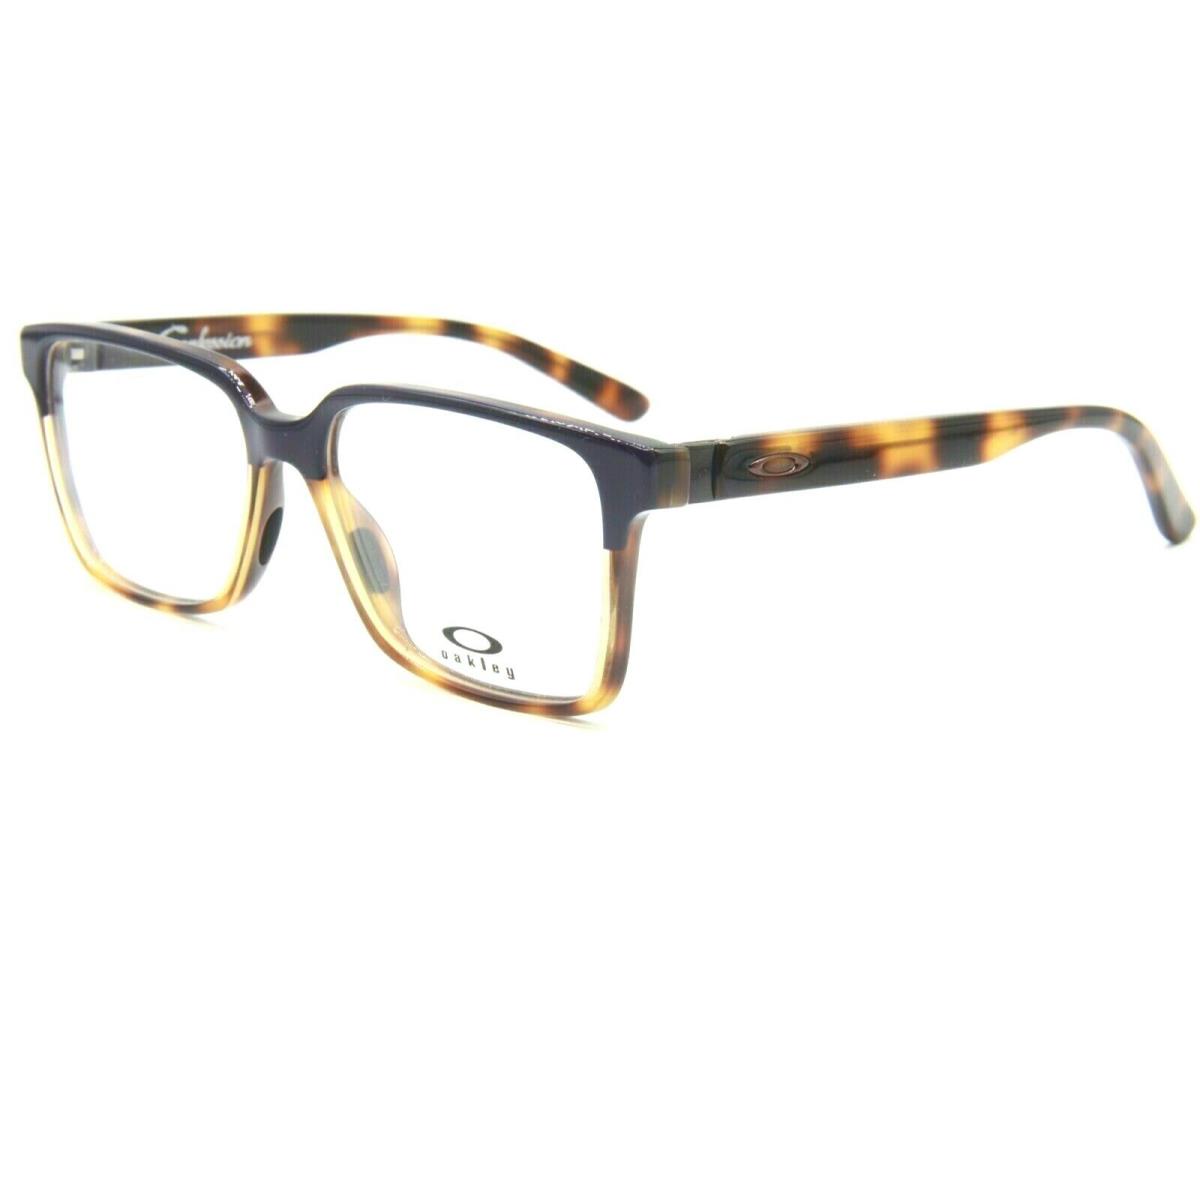 Oakley eyeglasses  - PURPLE/TORTOISE Frame